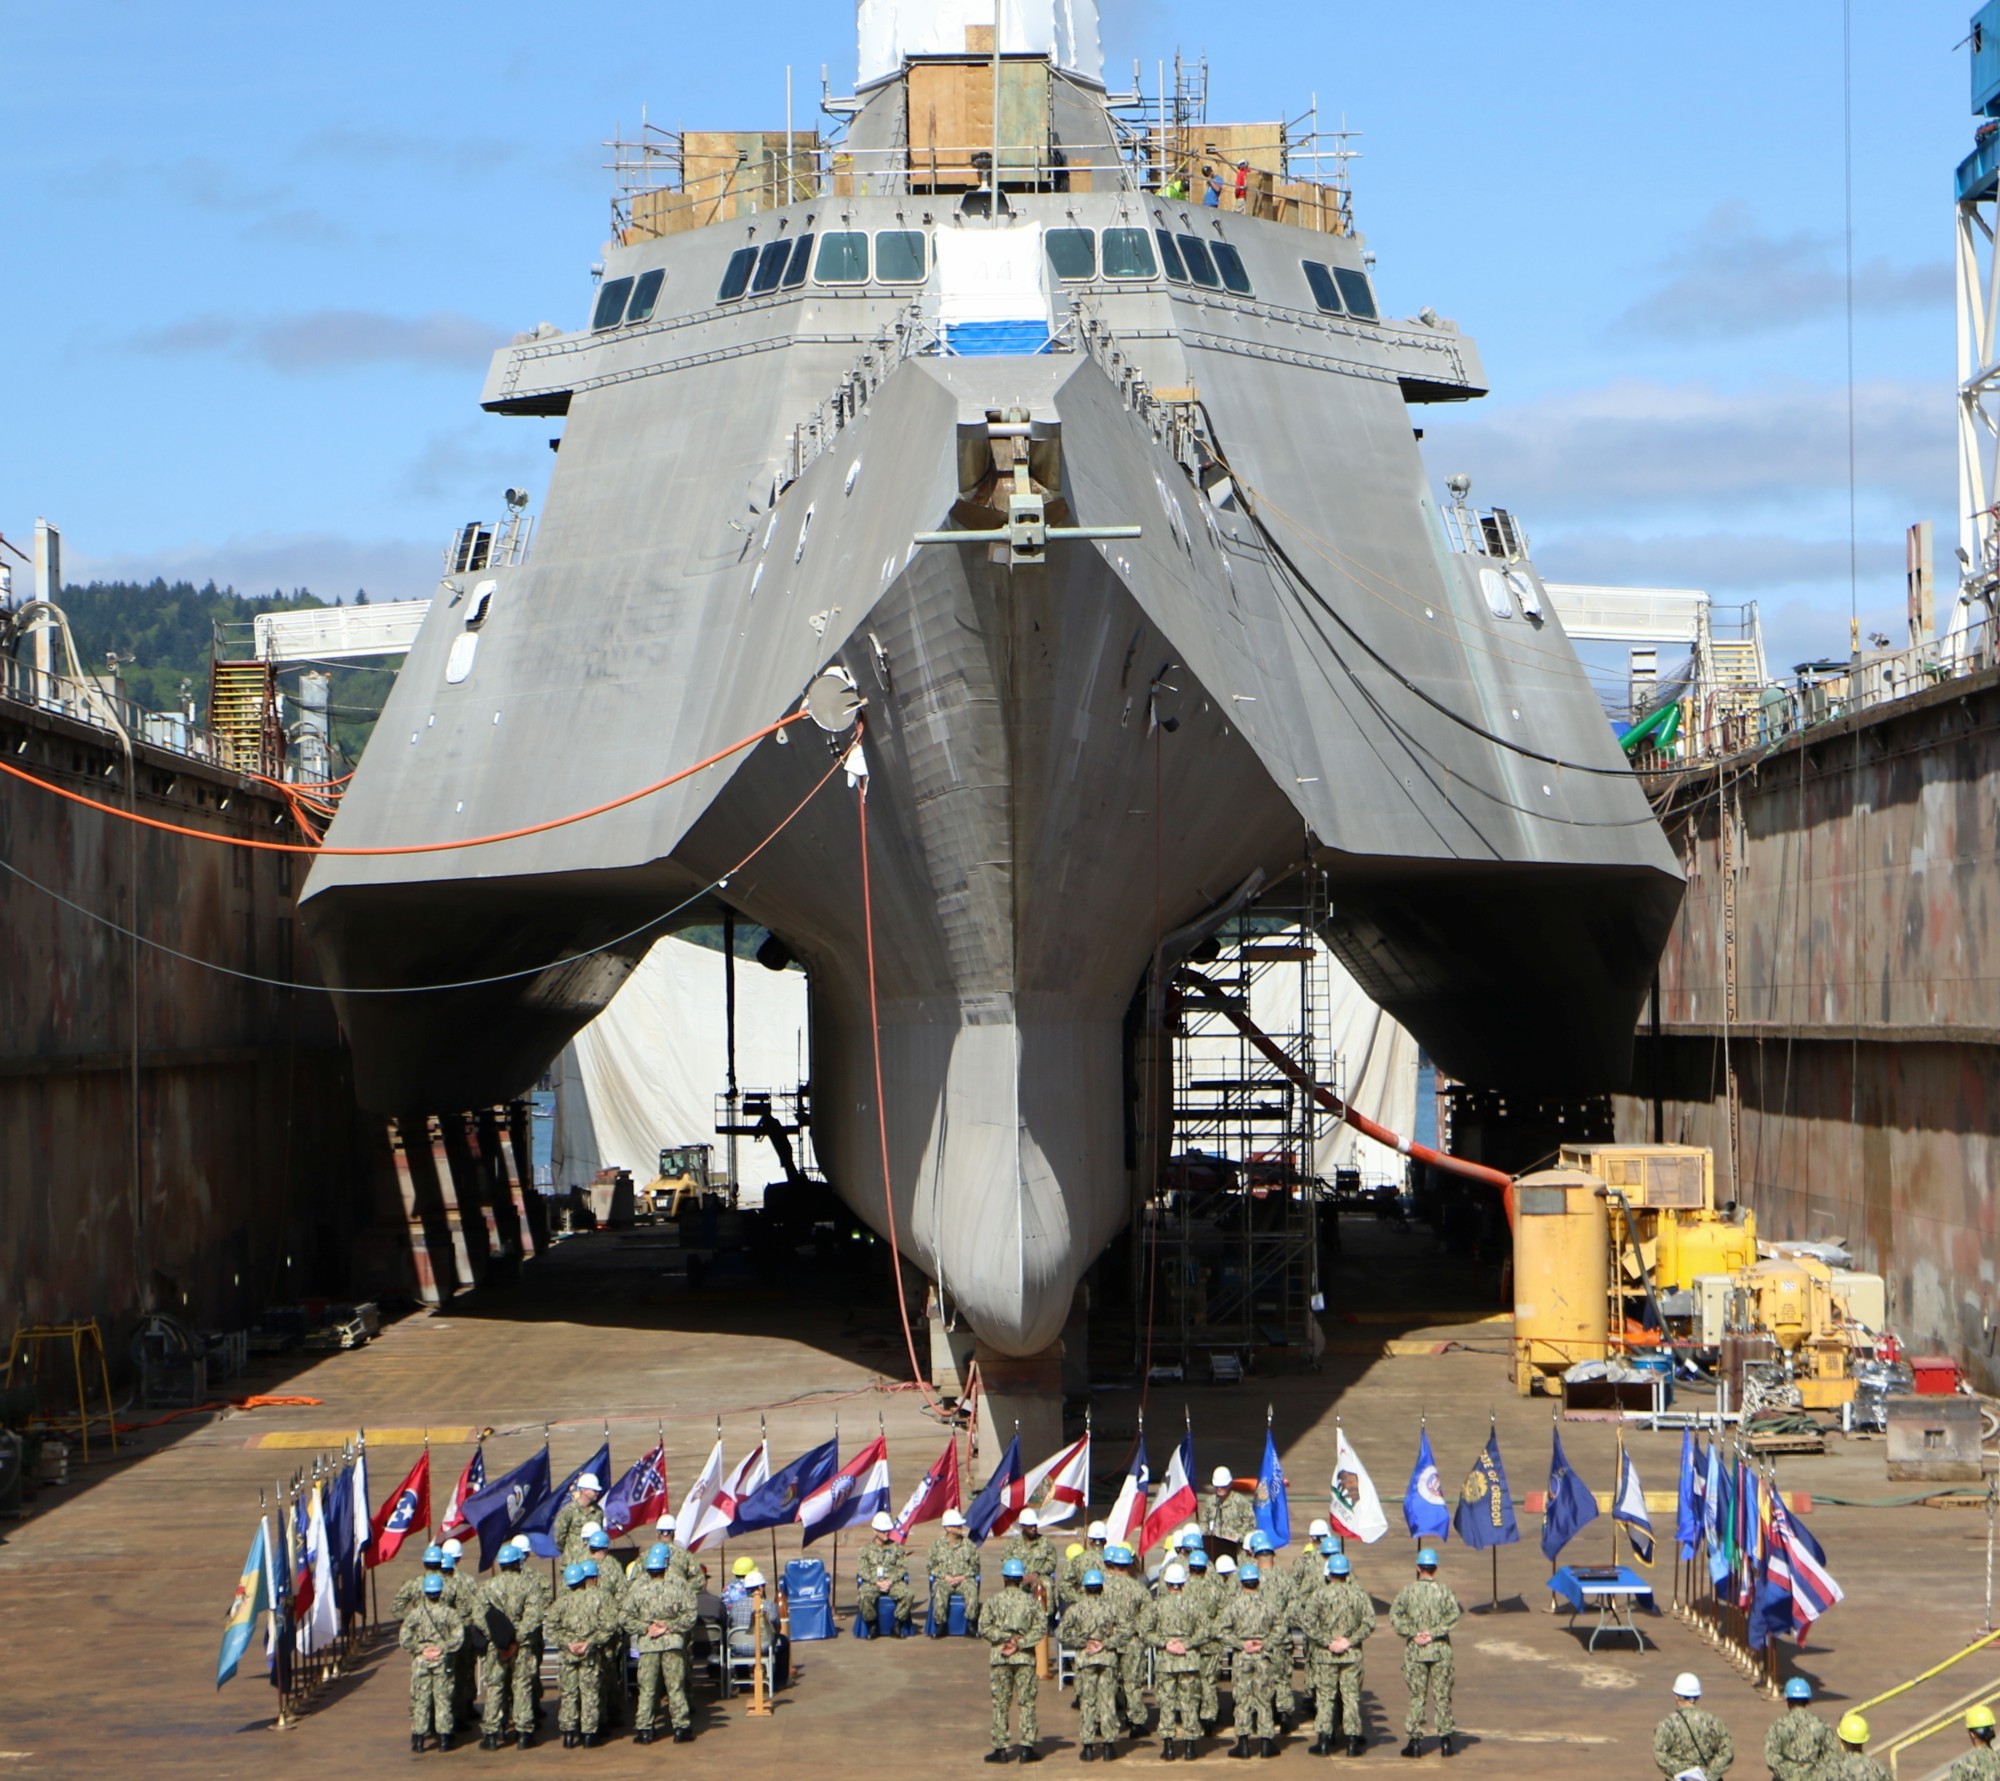 lcs-4 uss coronado independence class littoral combat ship us navy 02 dry dock vigor shipyard portland oregon